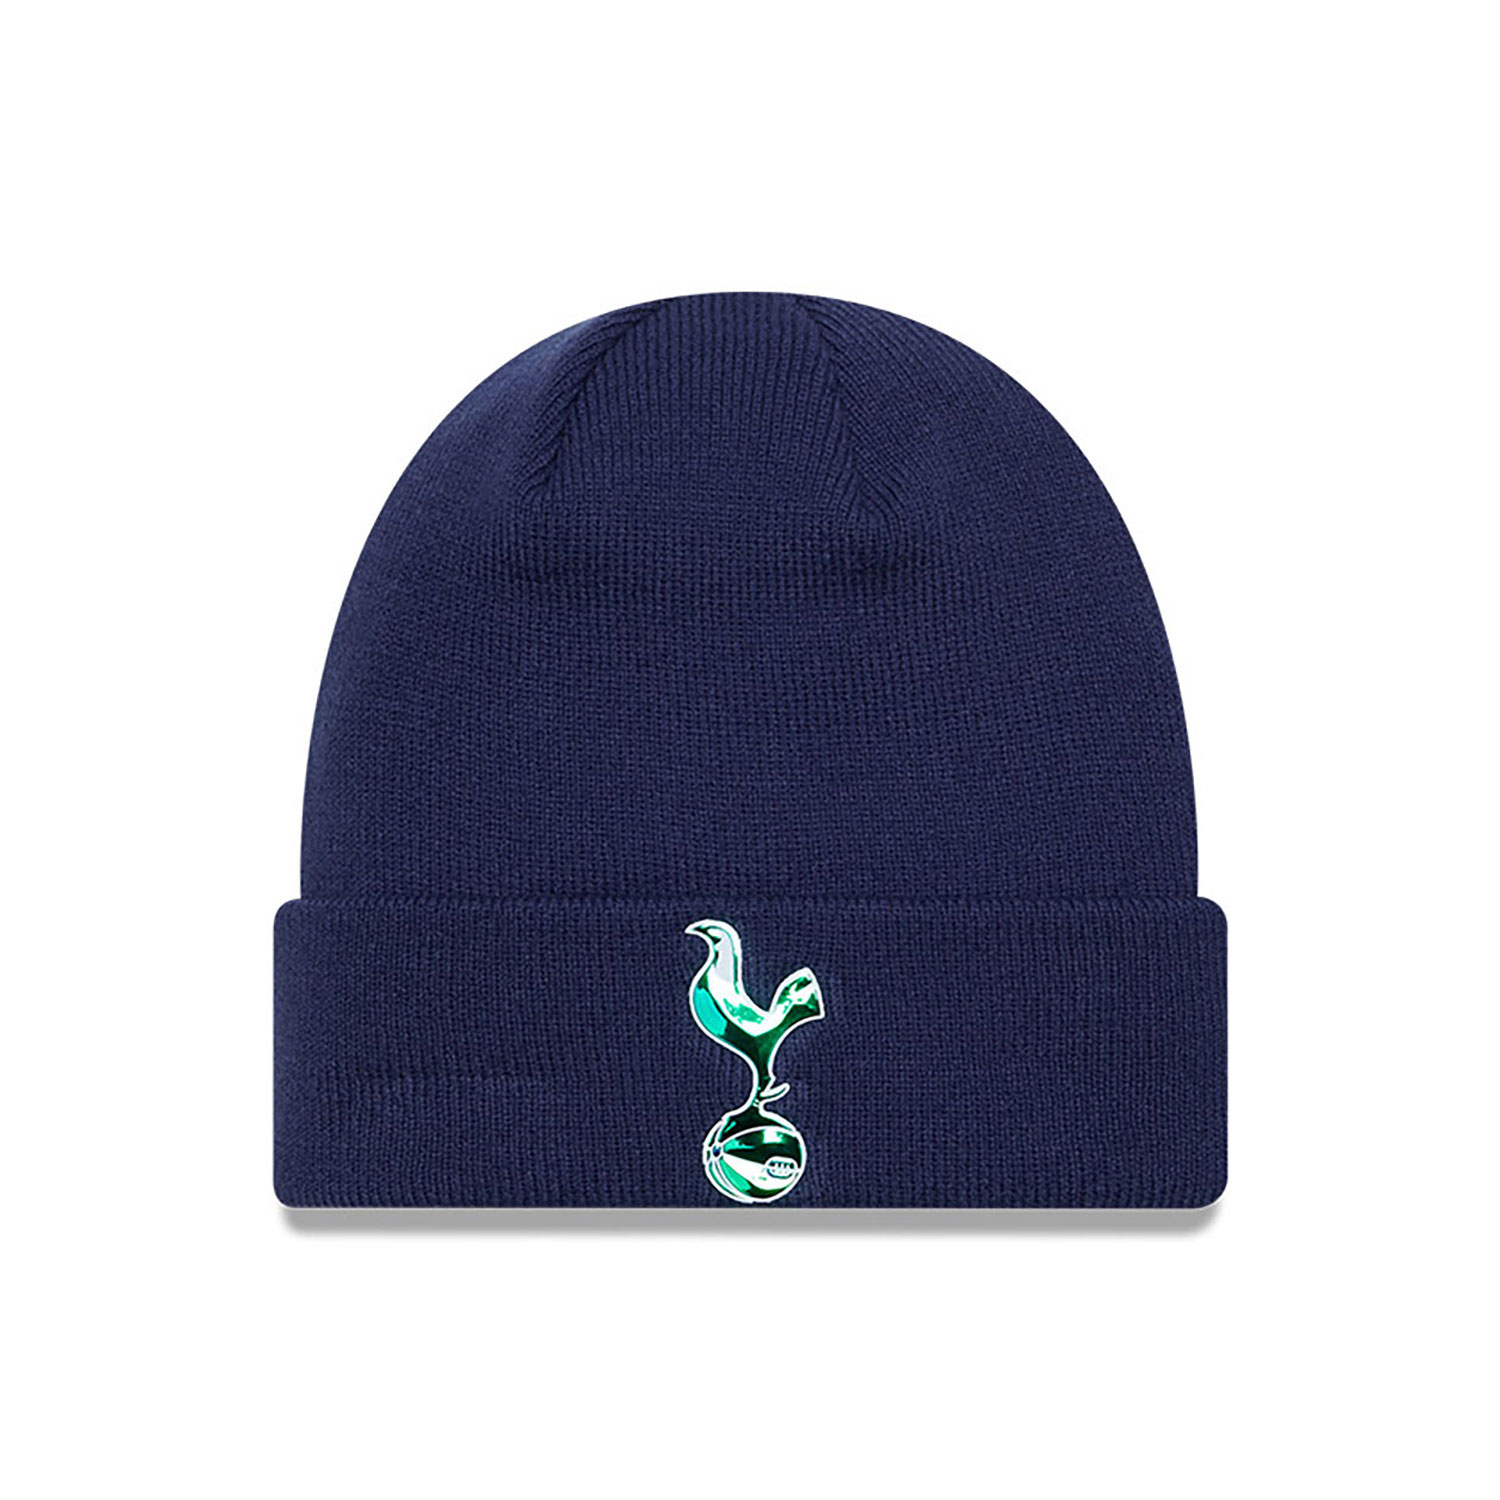 Tottenham Hotspur FC Iridescent Navy Cuff Knit Beanie Hat